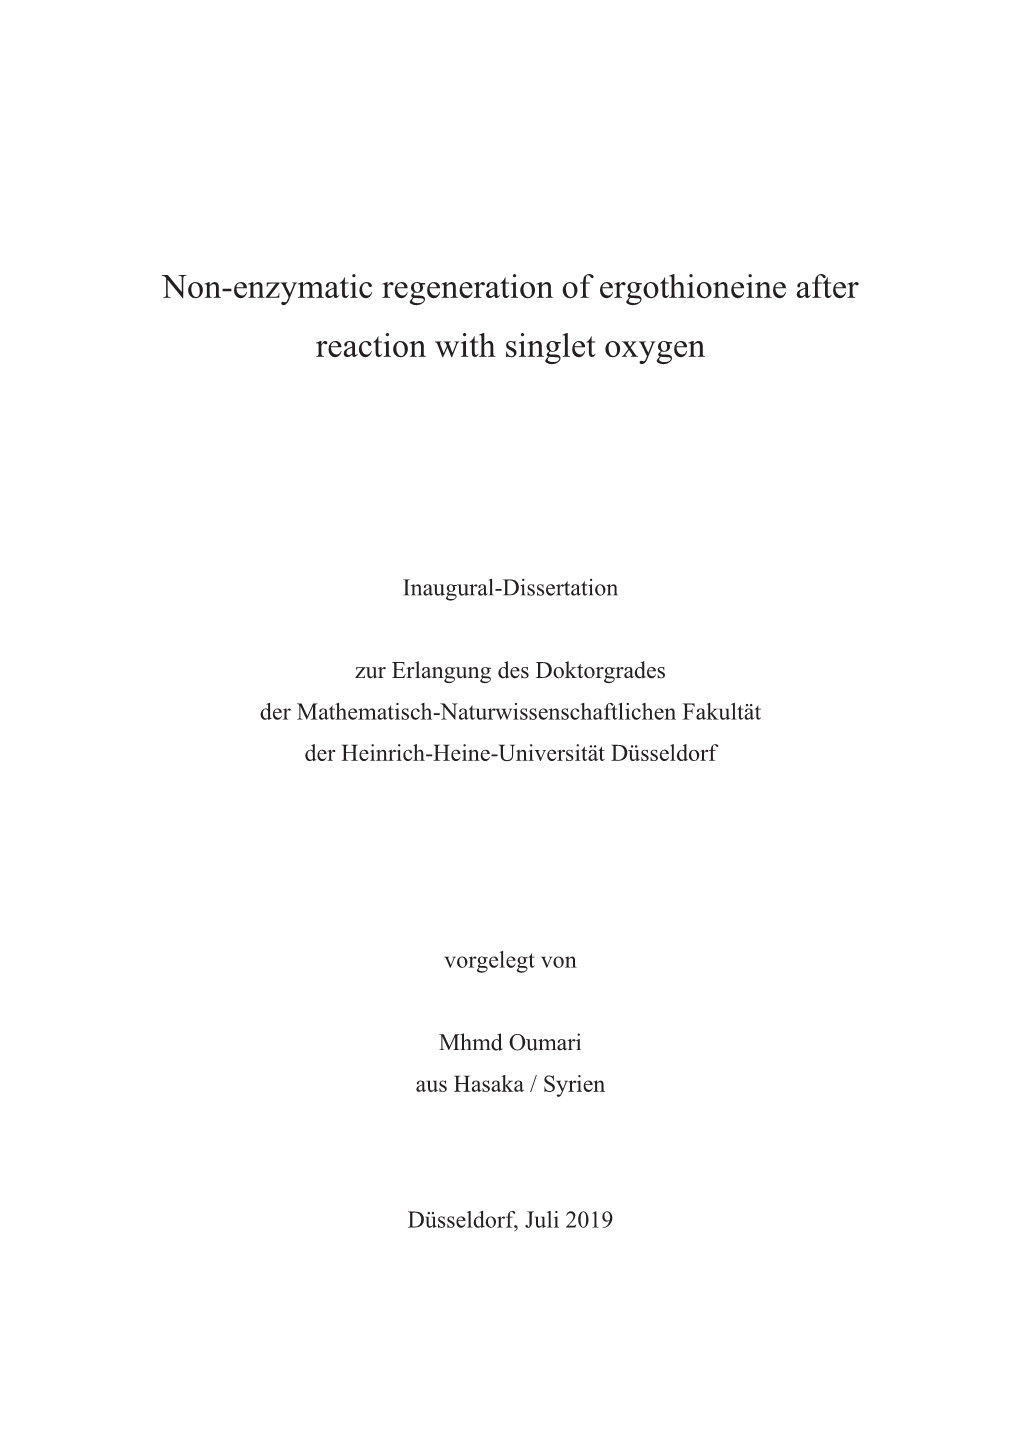 Non-Enzymatic Regeneration of Ergothioneine After Reaction with Singlet Oxygen